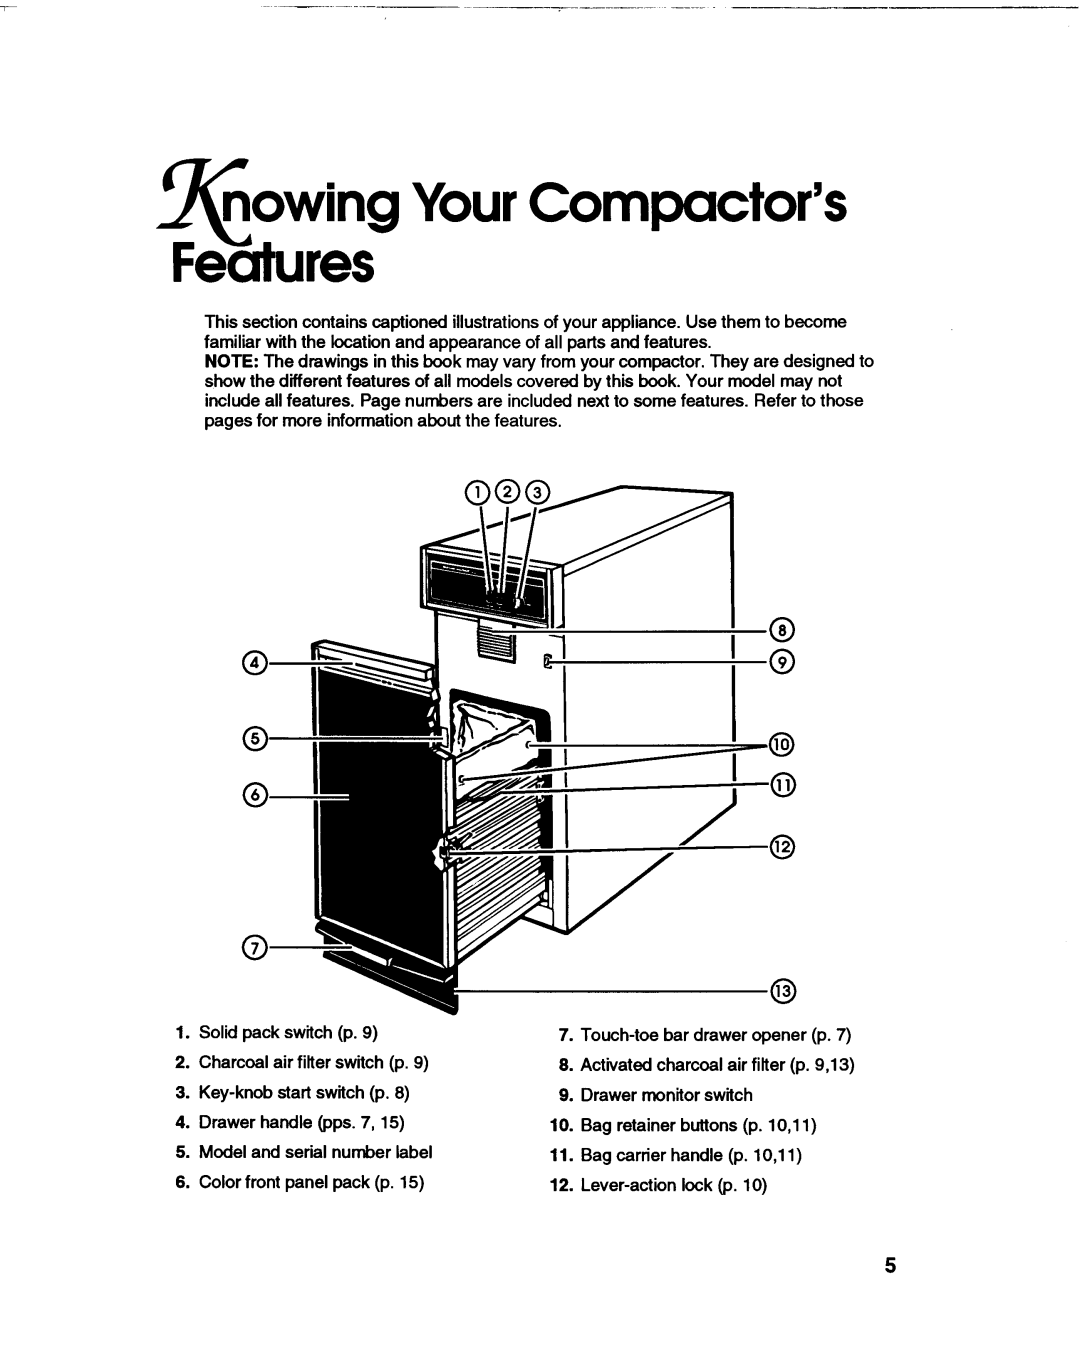 KitchenAid KUCC151, Trash Compactor, 403, KCCC151 manual 